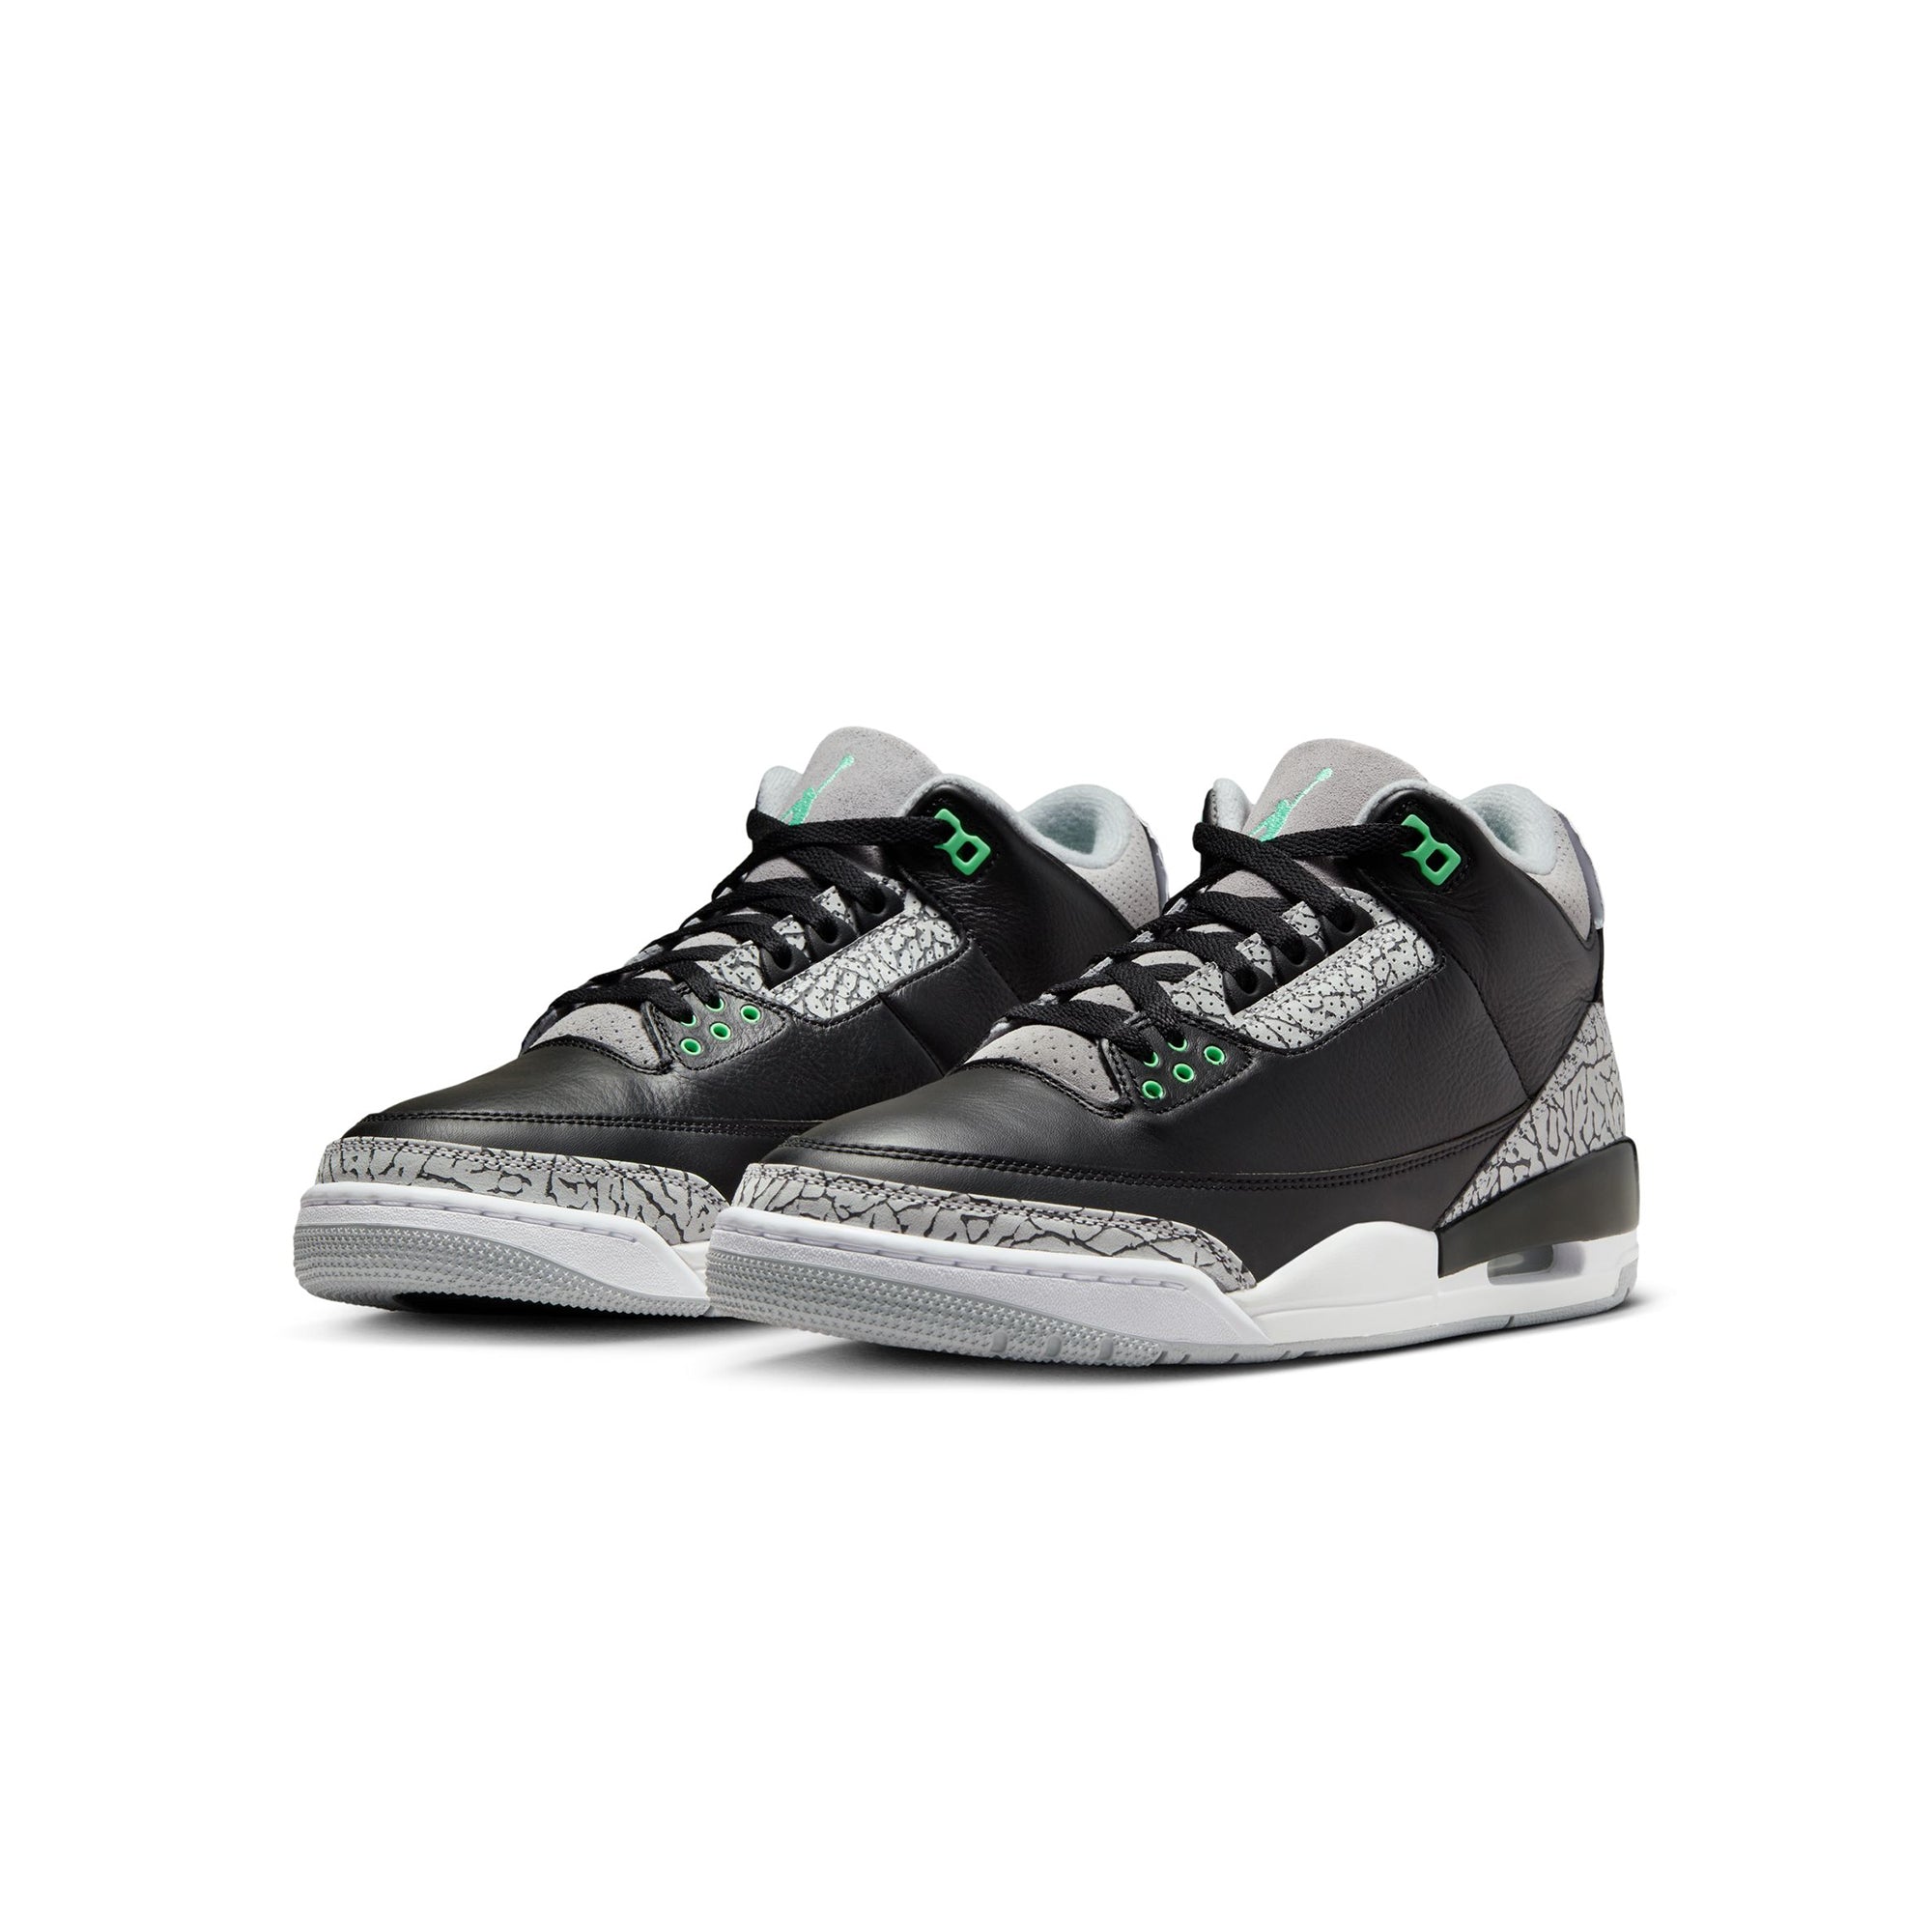 Air Jordan 3 Mens Retro Shoes